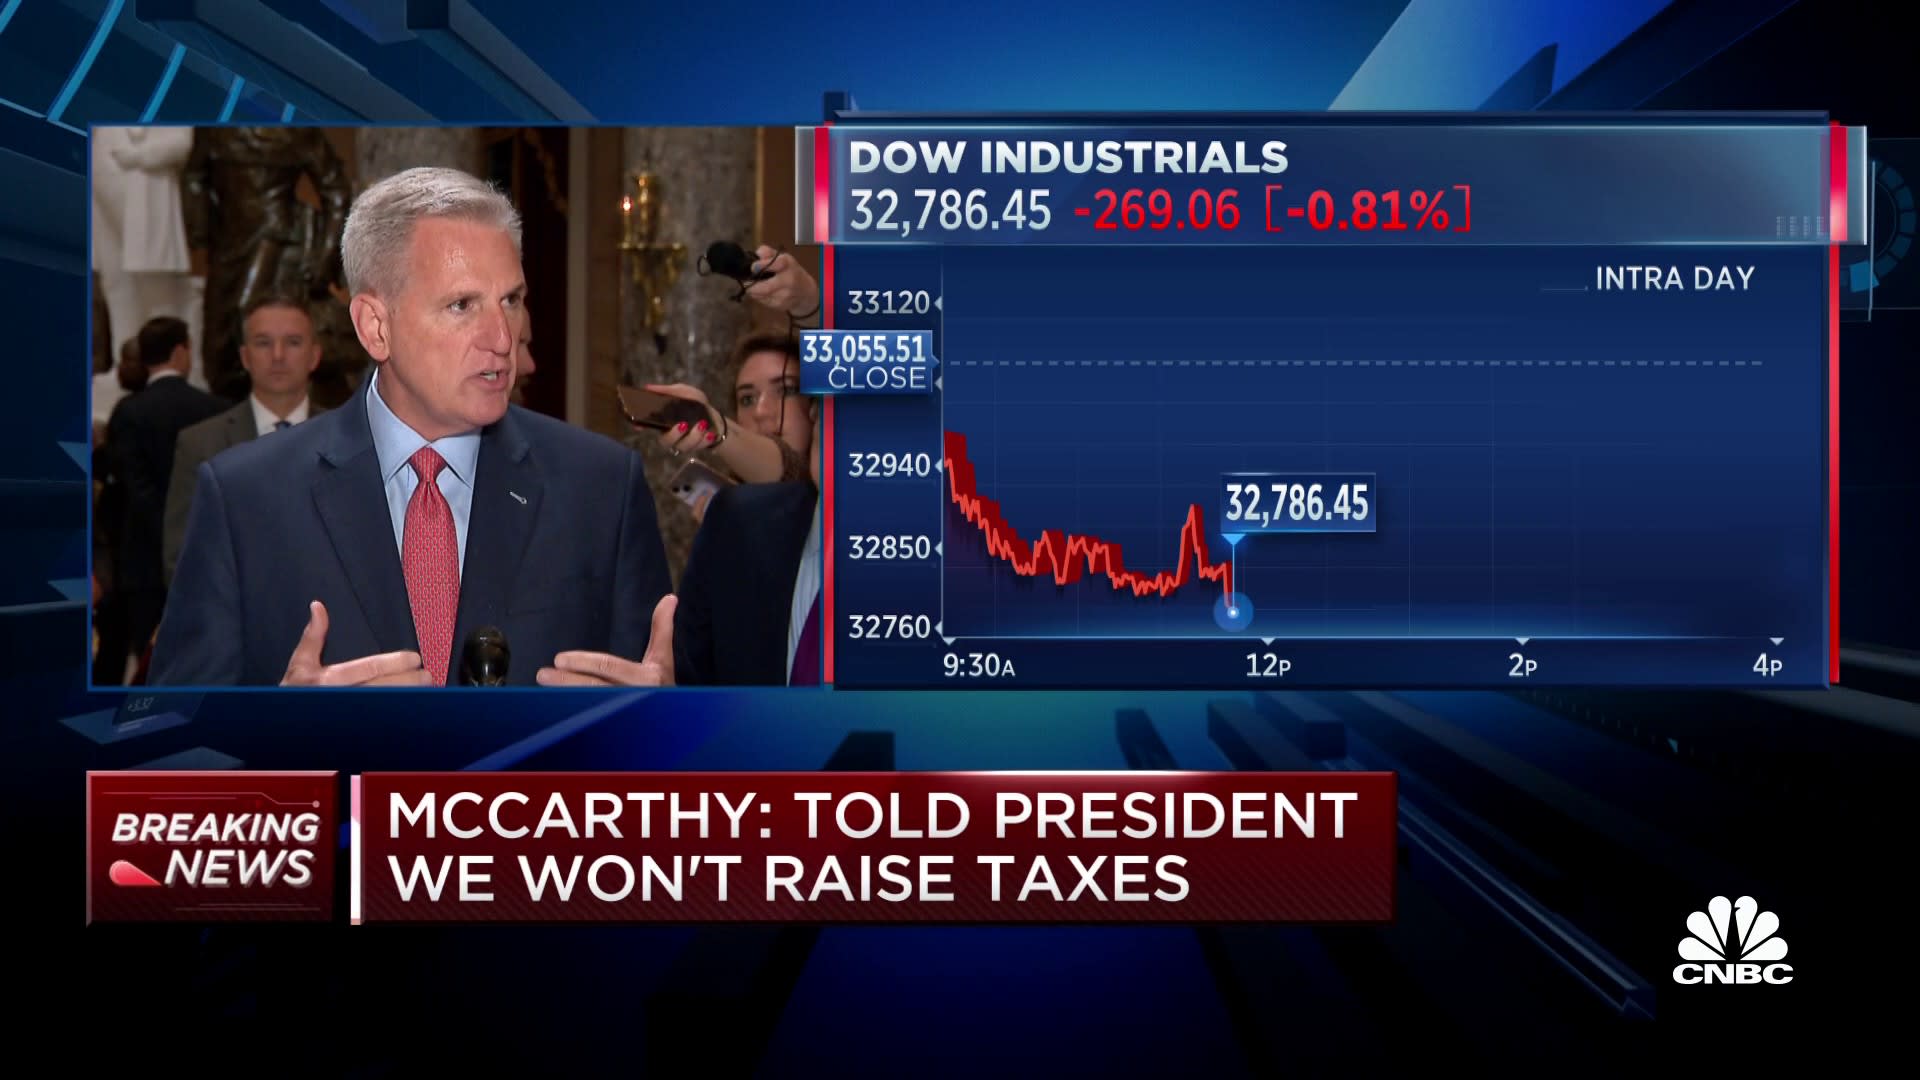 House Speaker Kevin McCarthy on debt ceiling talks: We told Biden we won't raise taxes